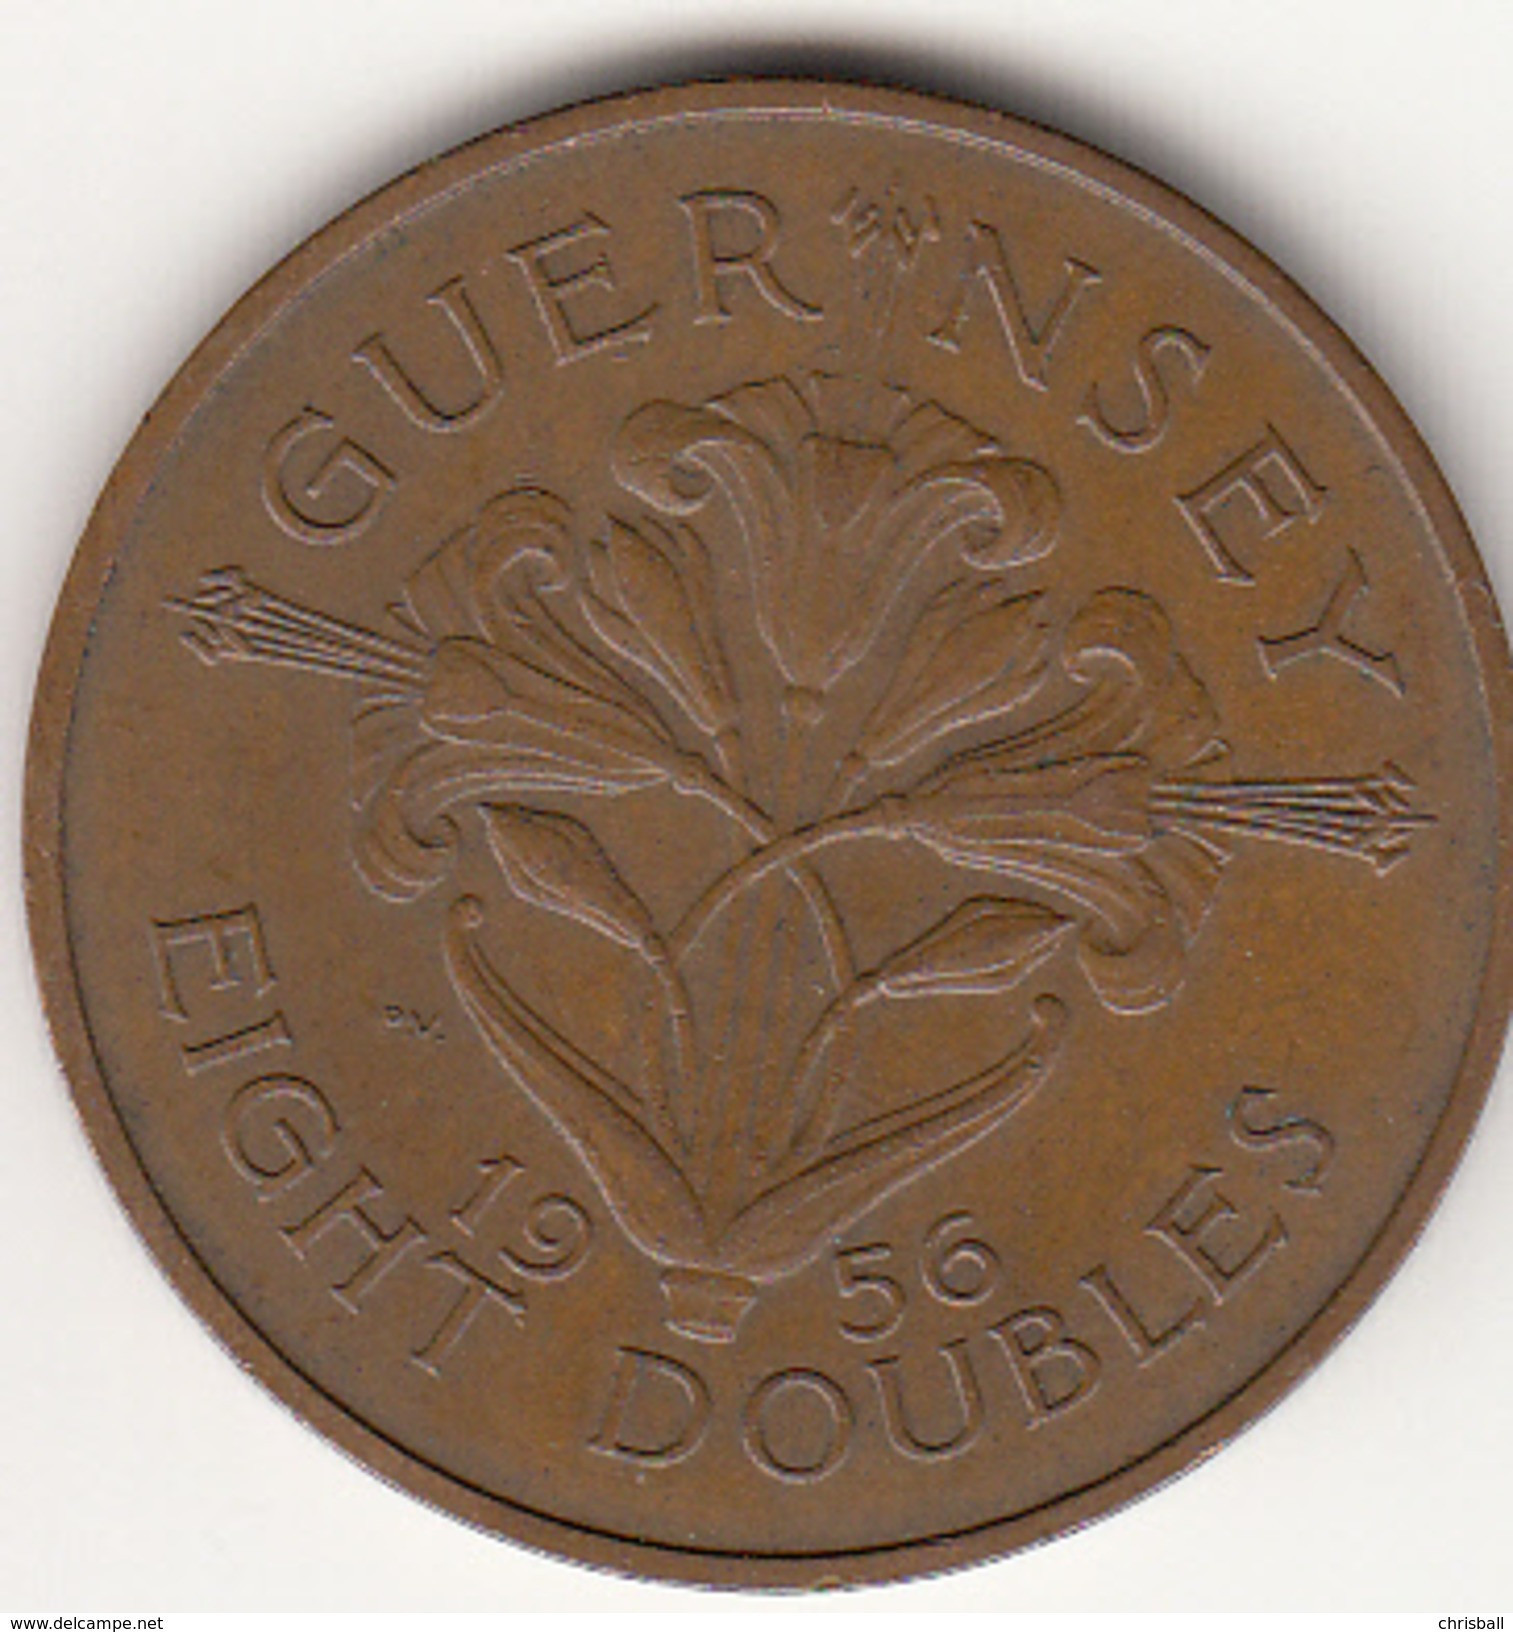 Guernsey Coin 8doubles 1956 Condition Very Fine - Guernsey